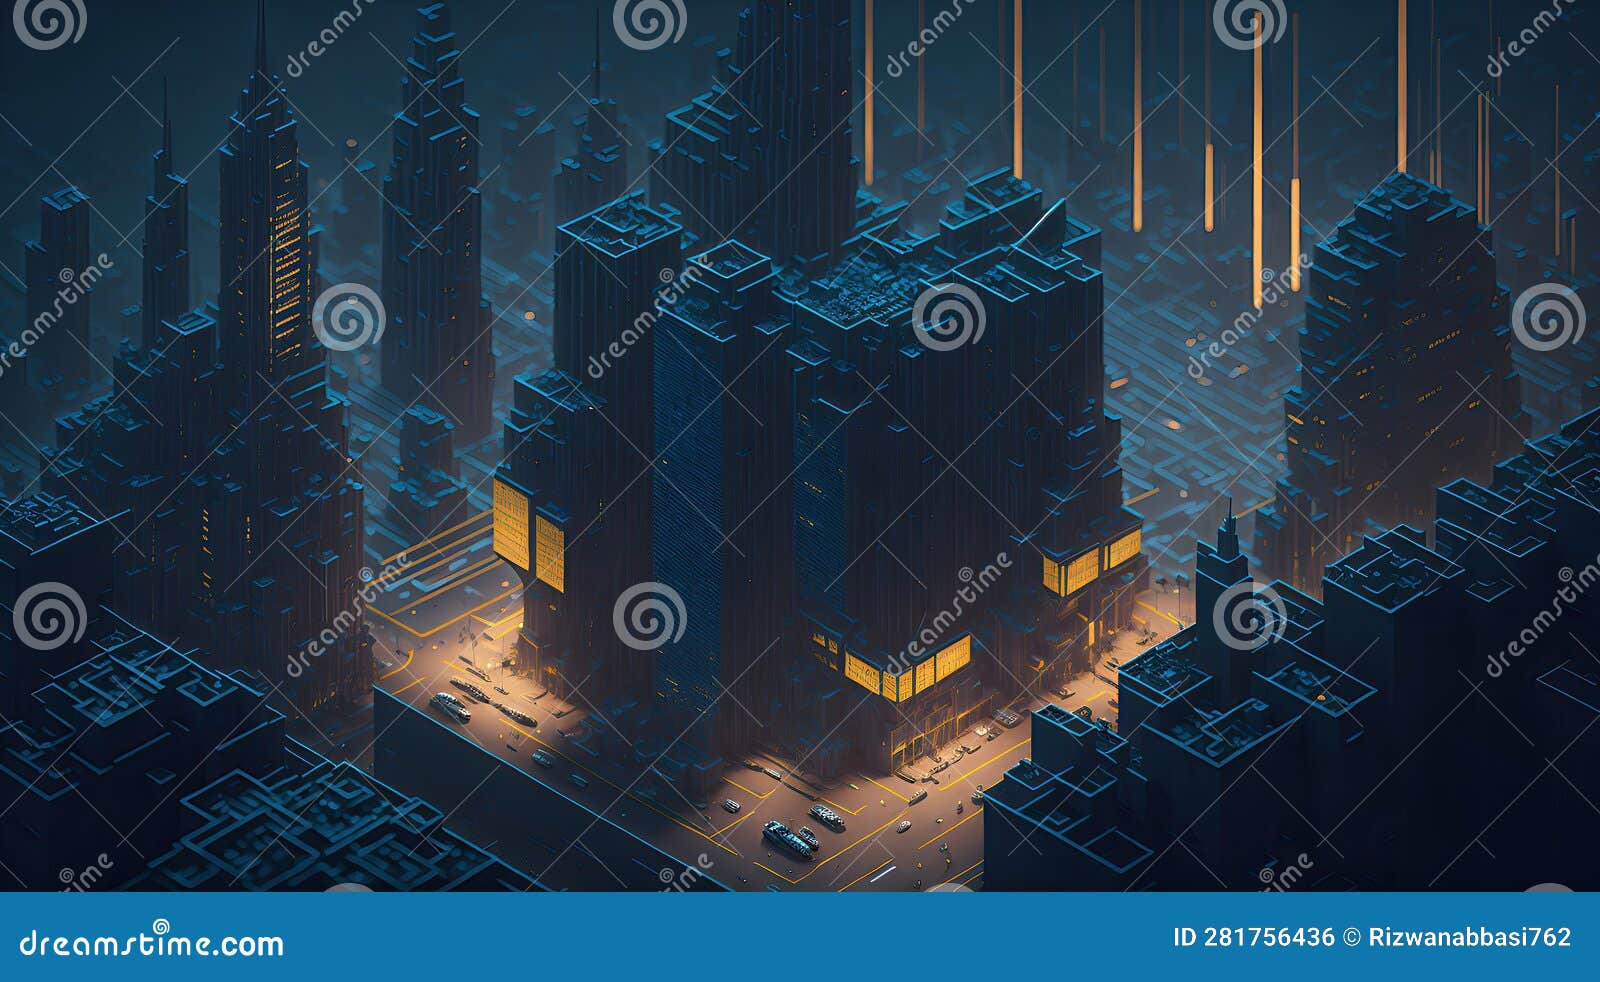 bring to life a futuristic isometric cityscape